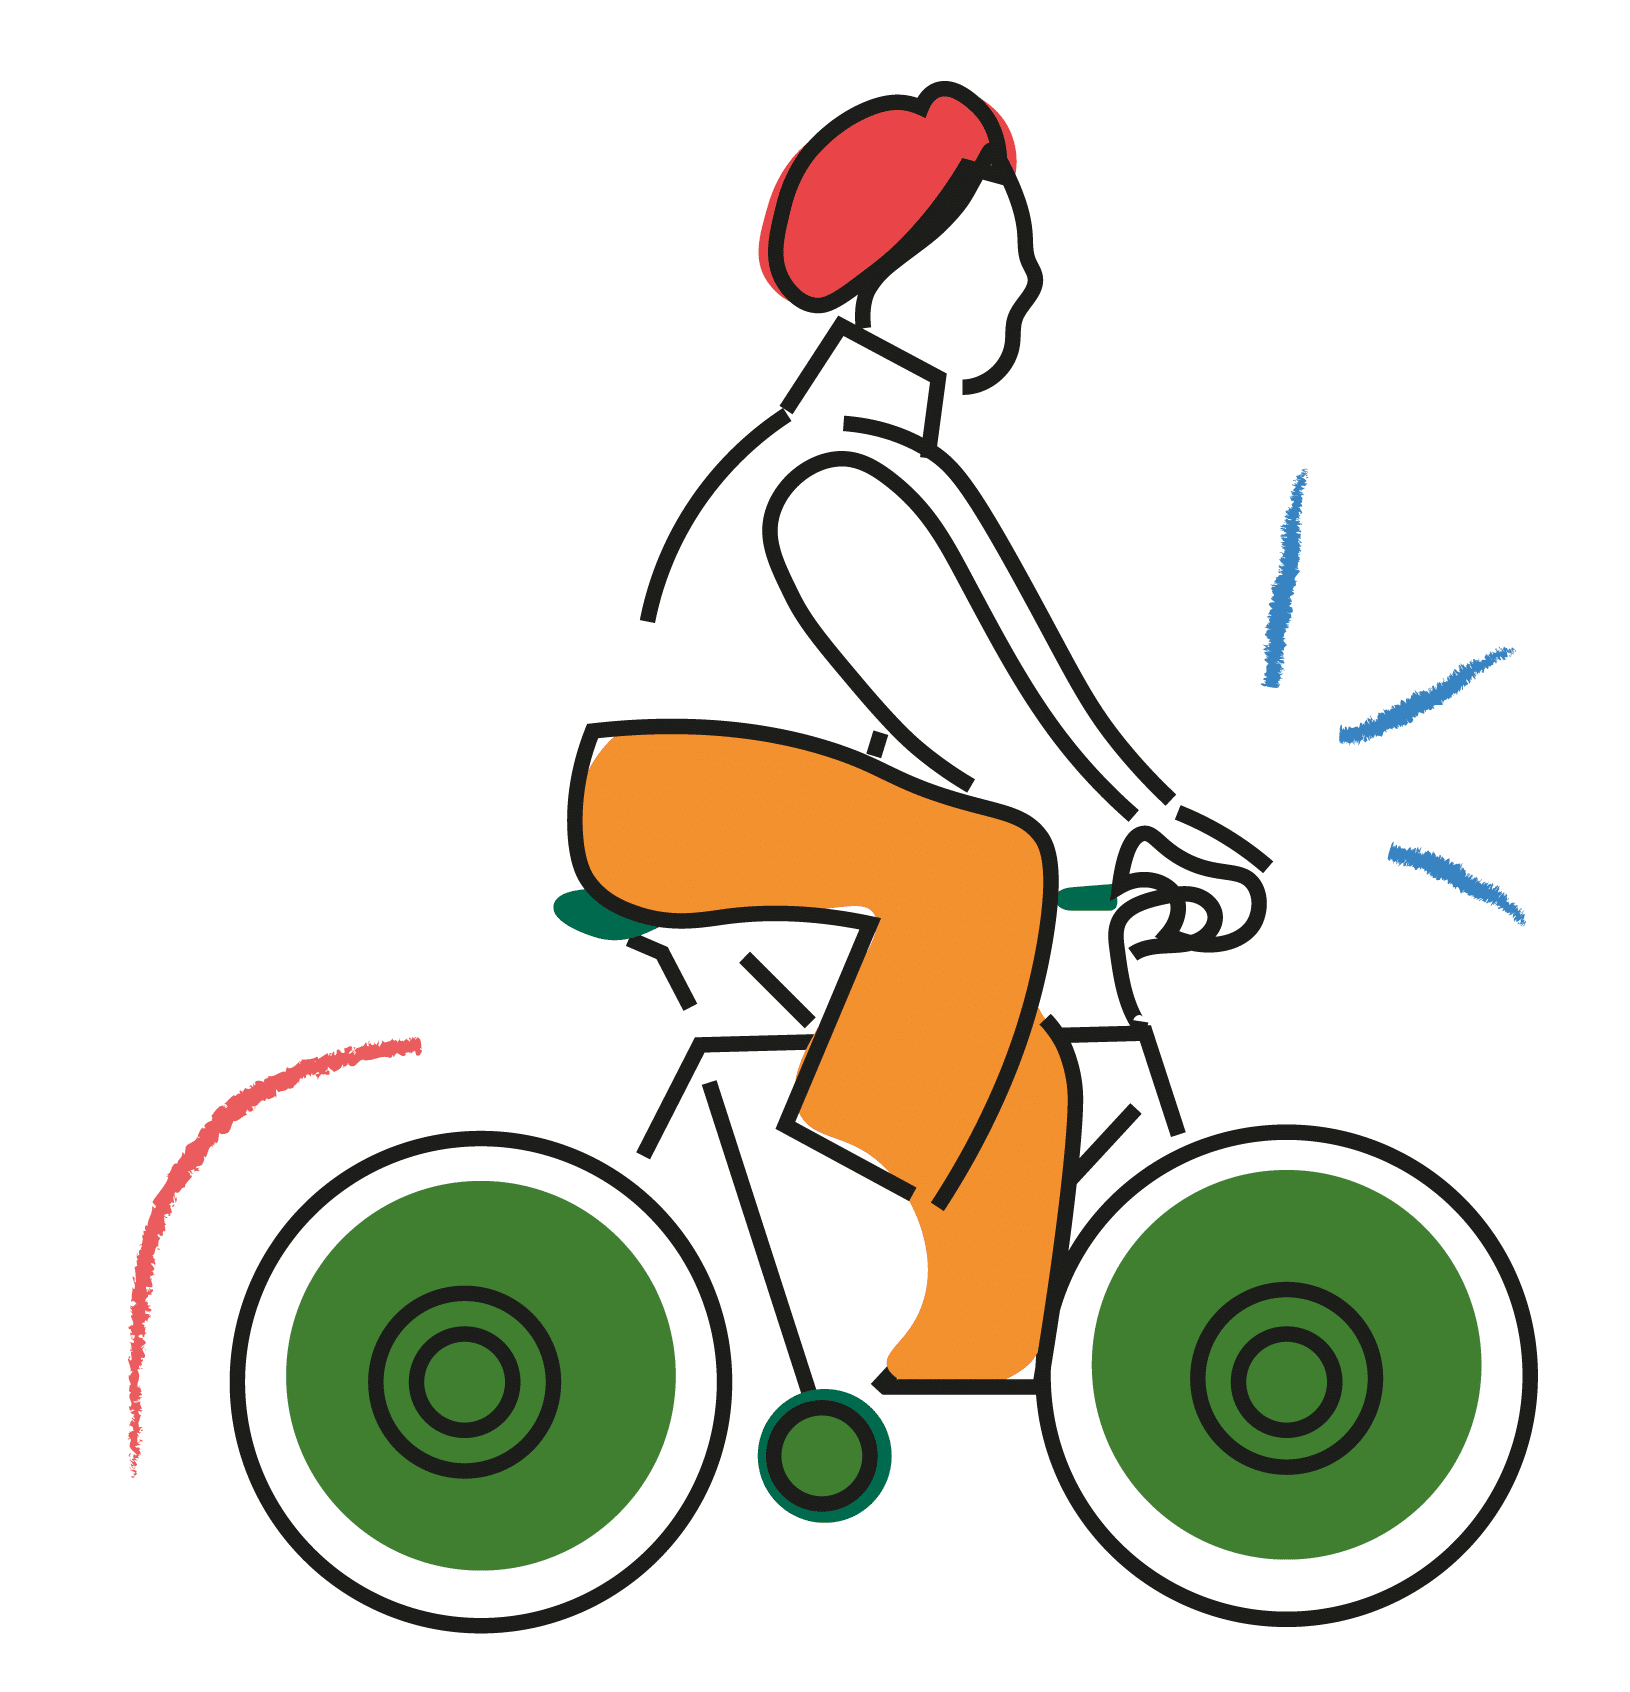 An illustration of a man riding a bike